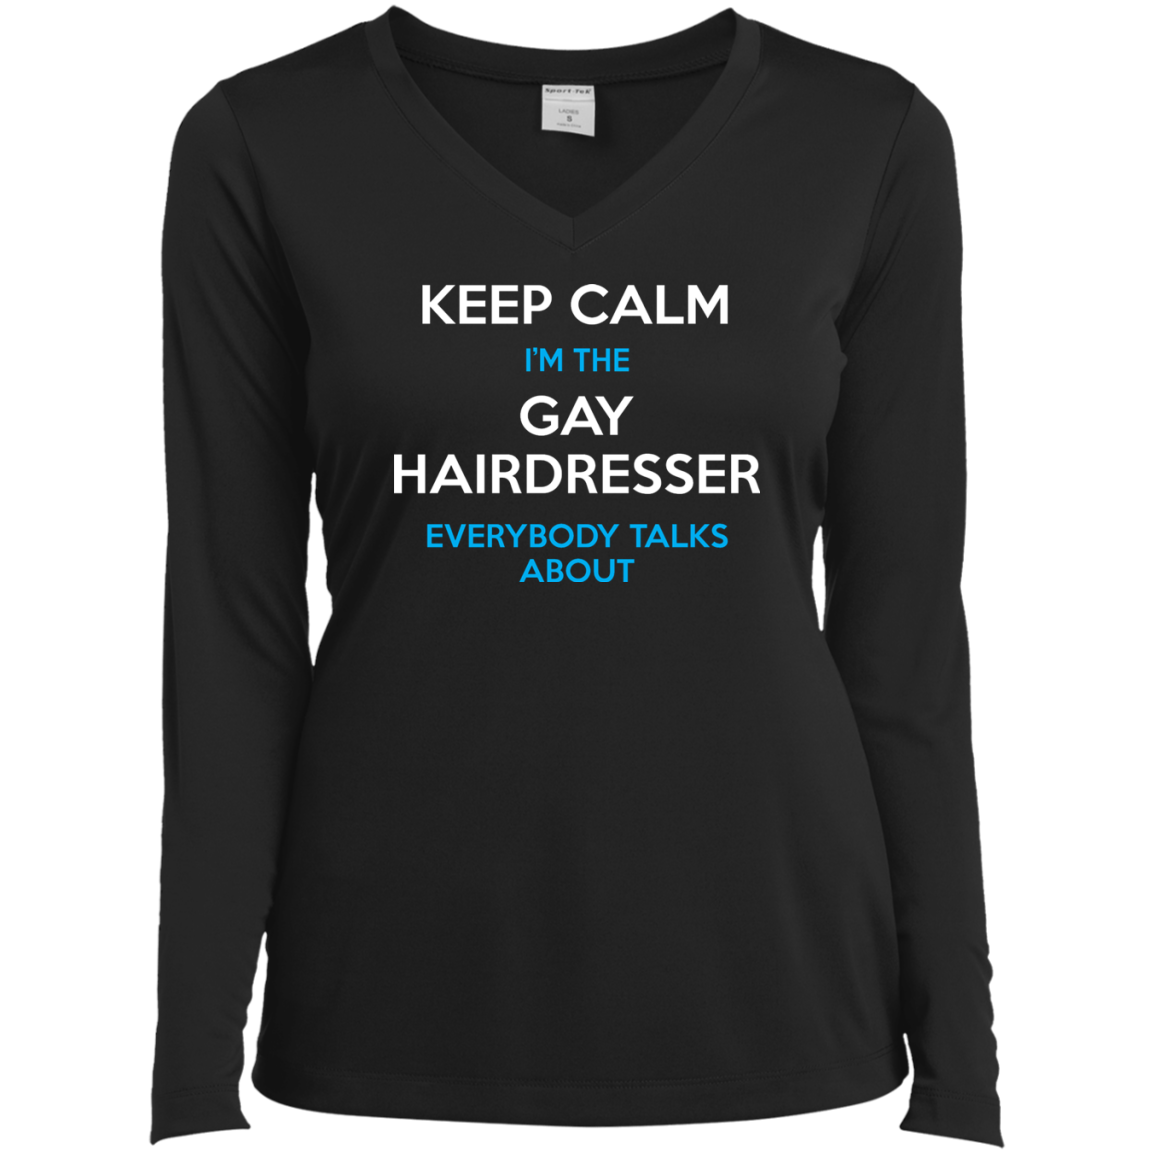 Keep Calm I'm The Gay Hairdresser black full sleeves v-neck black tshirt